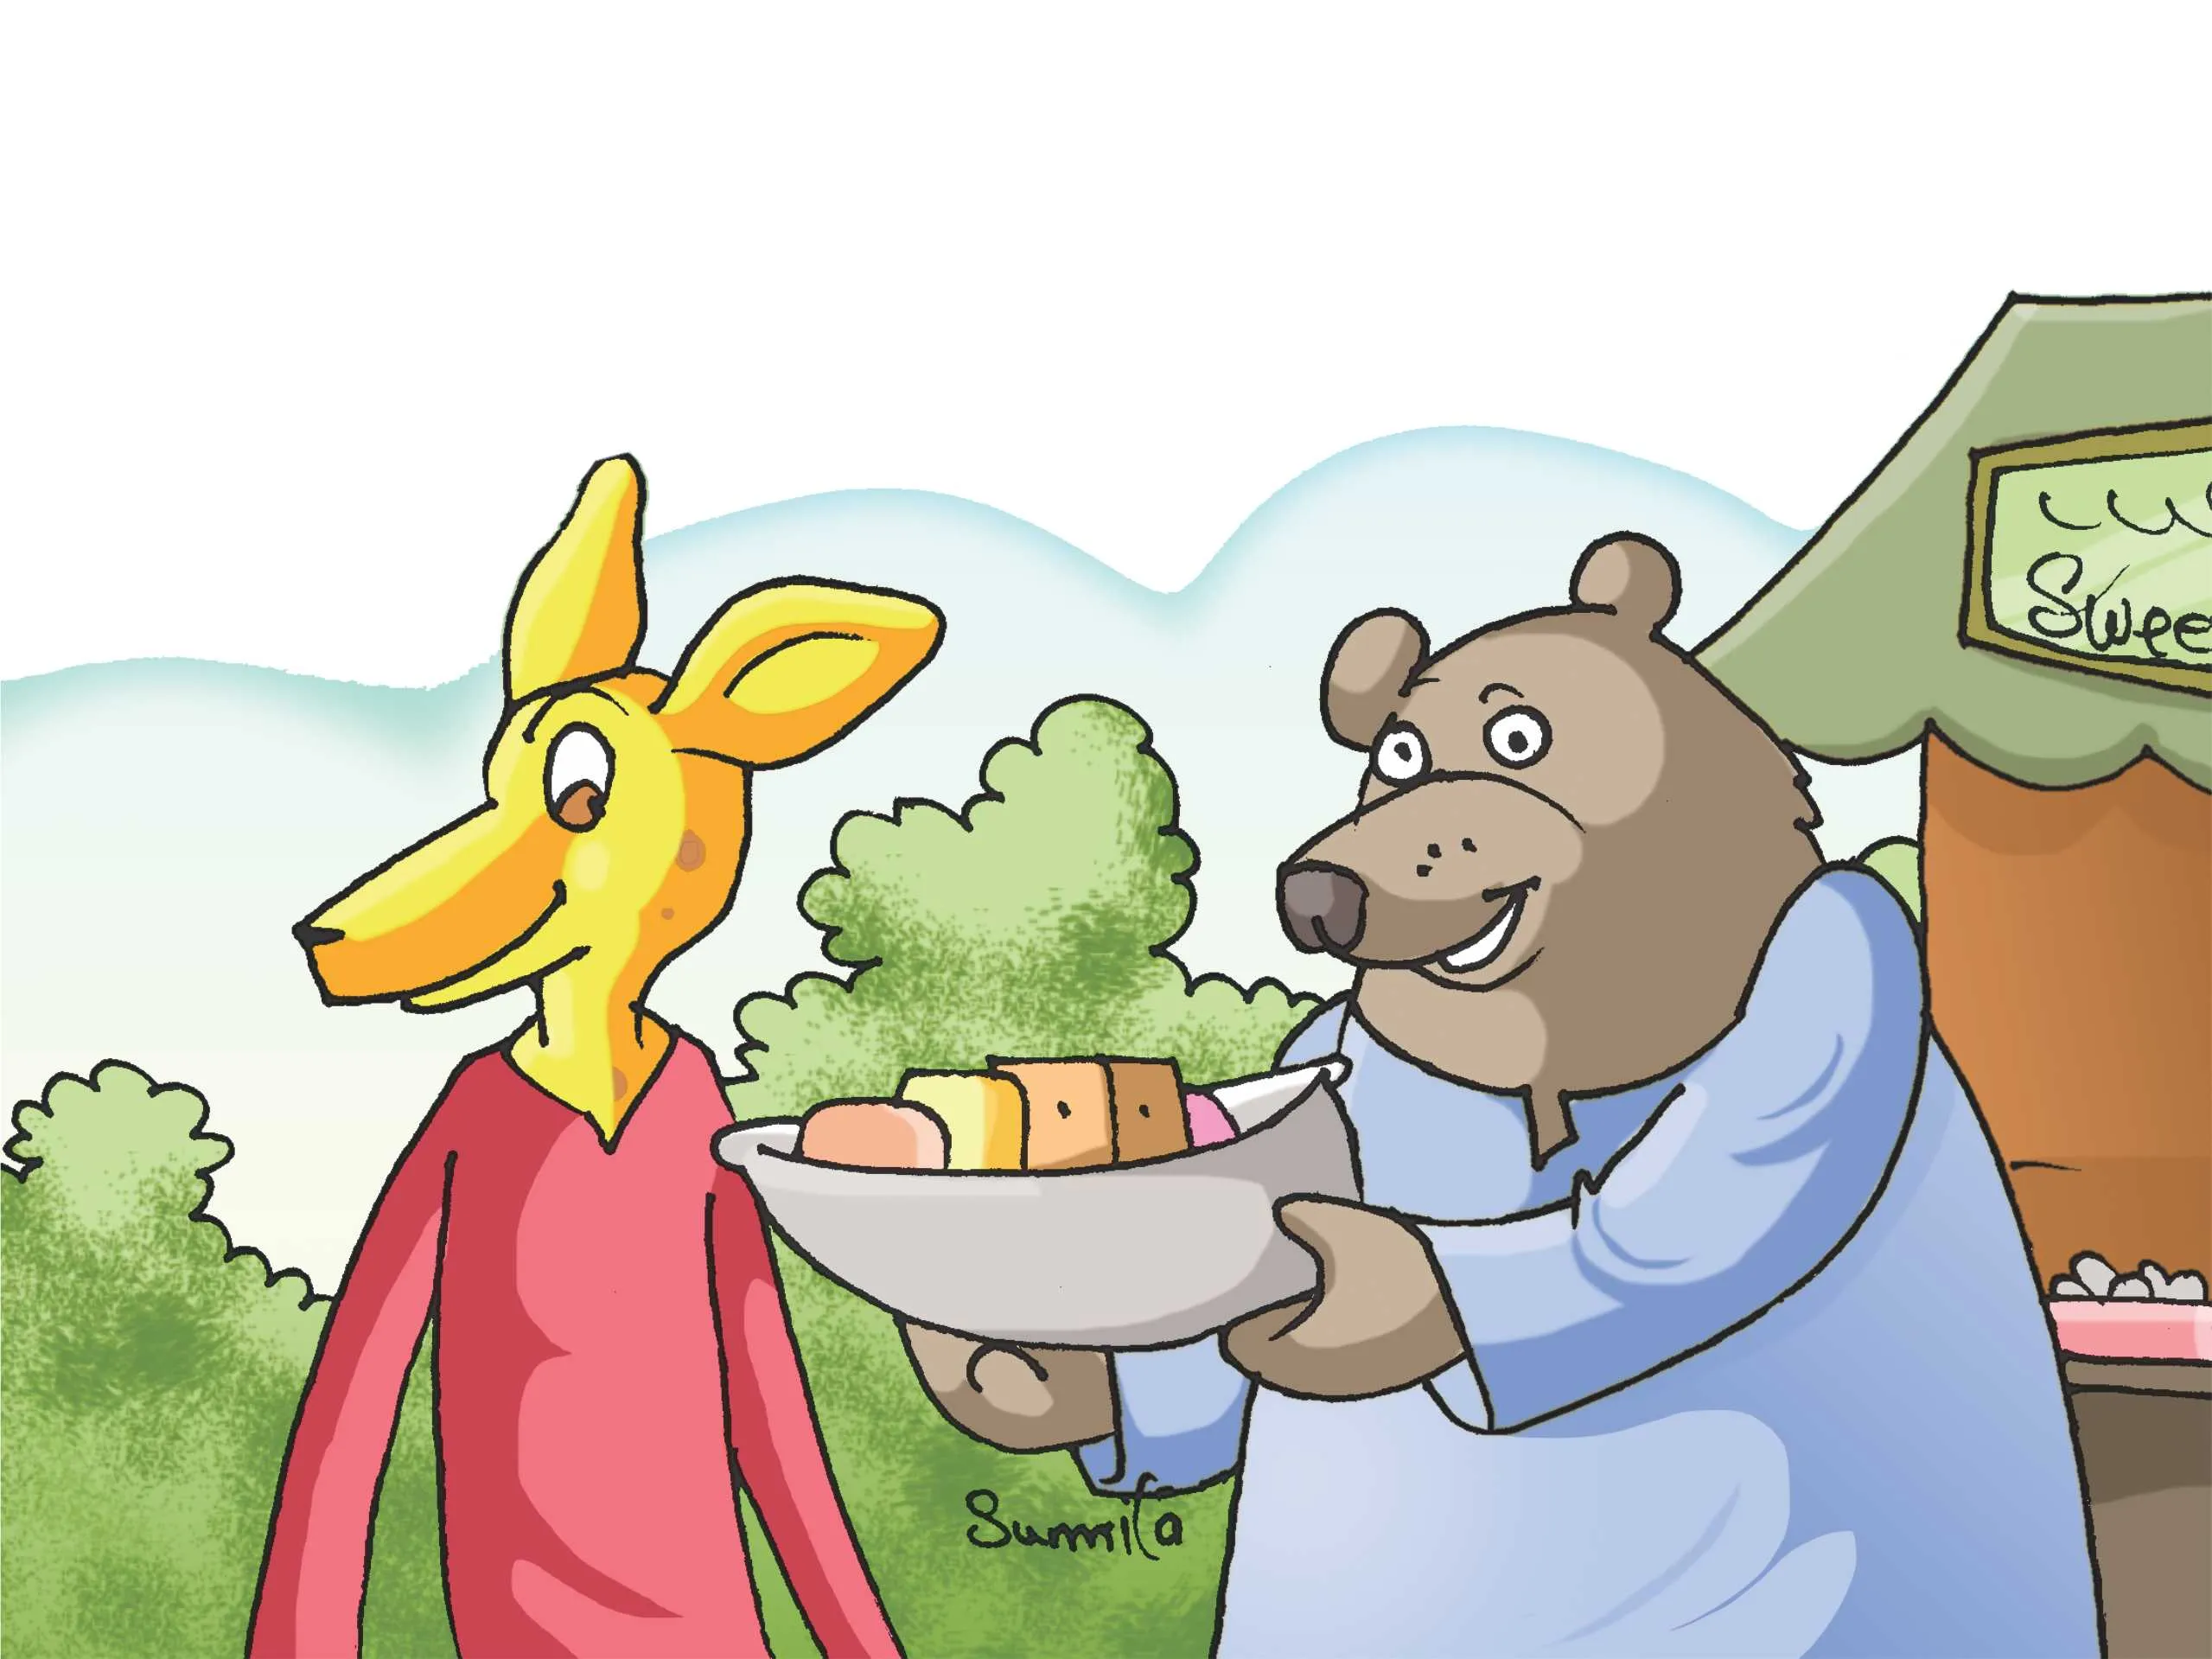 Bear Giving Sweets to Deer cartoon Image